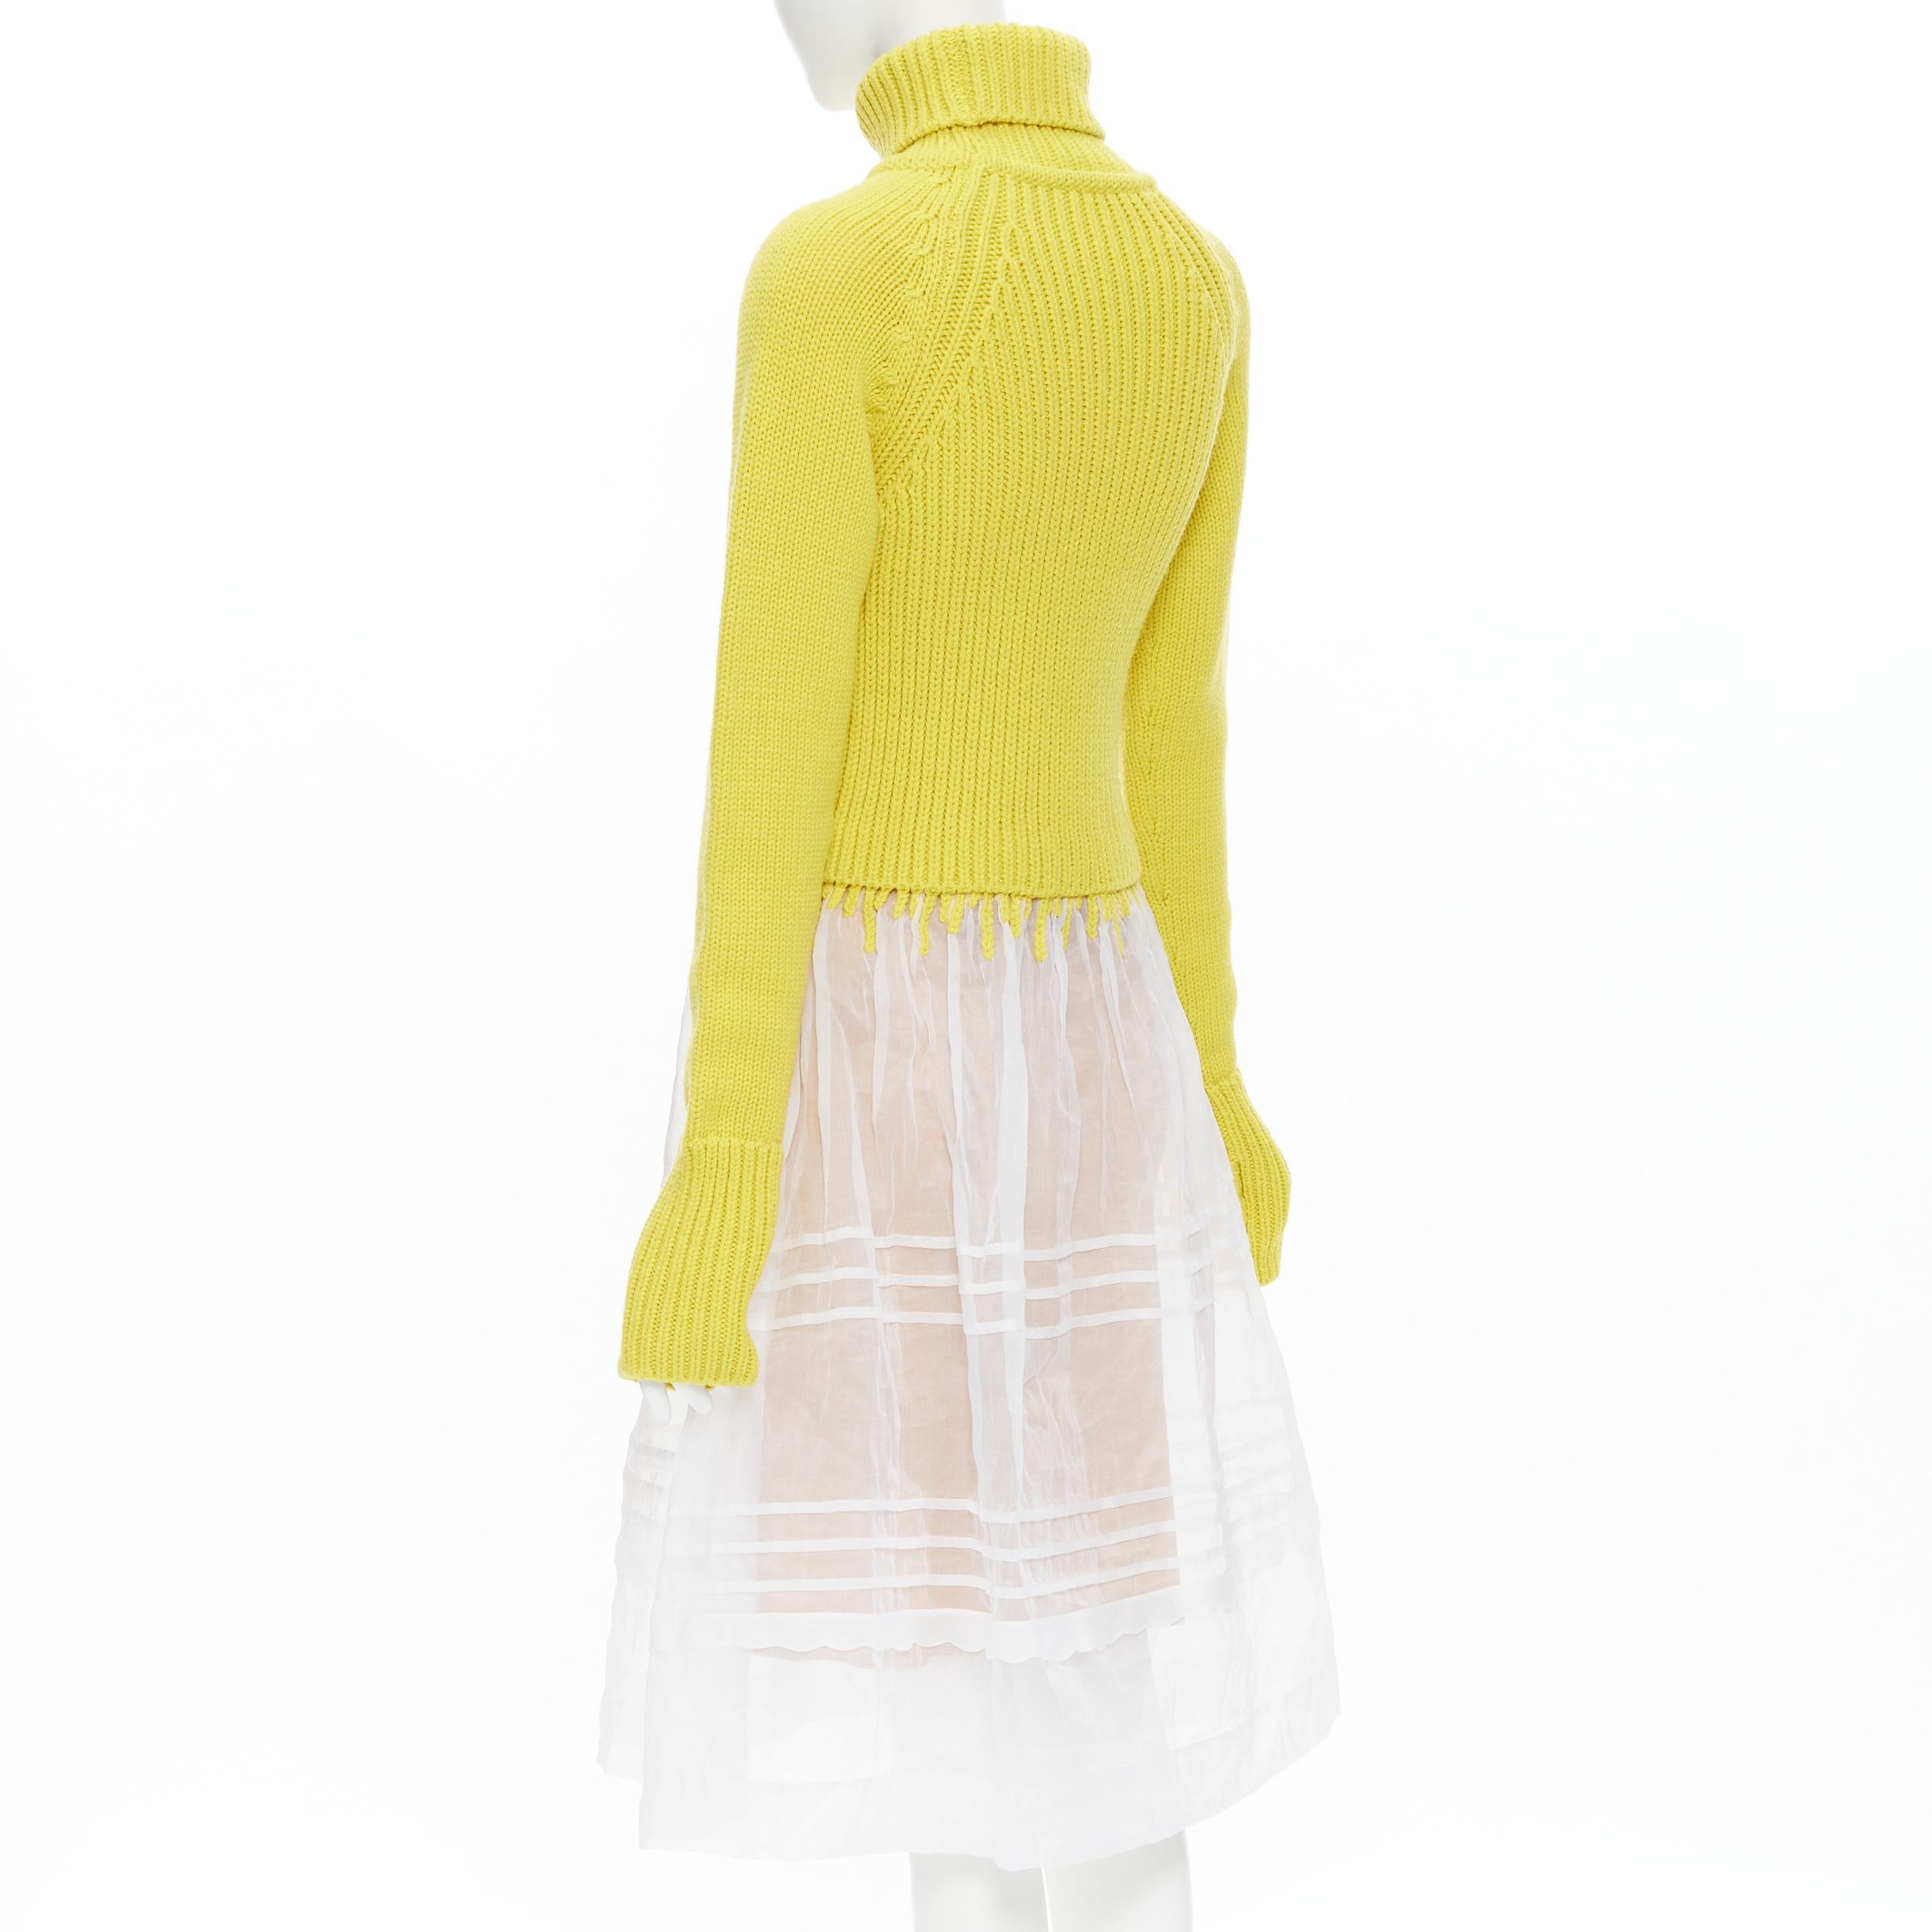 Beige new LOEWE yellow wool chunky knit turtleneck sweater sheer skirt dress M